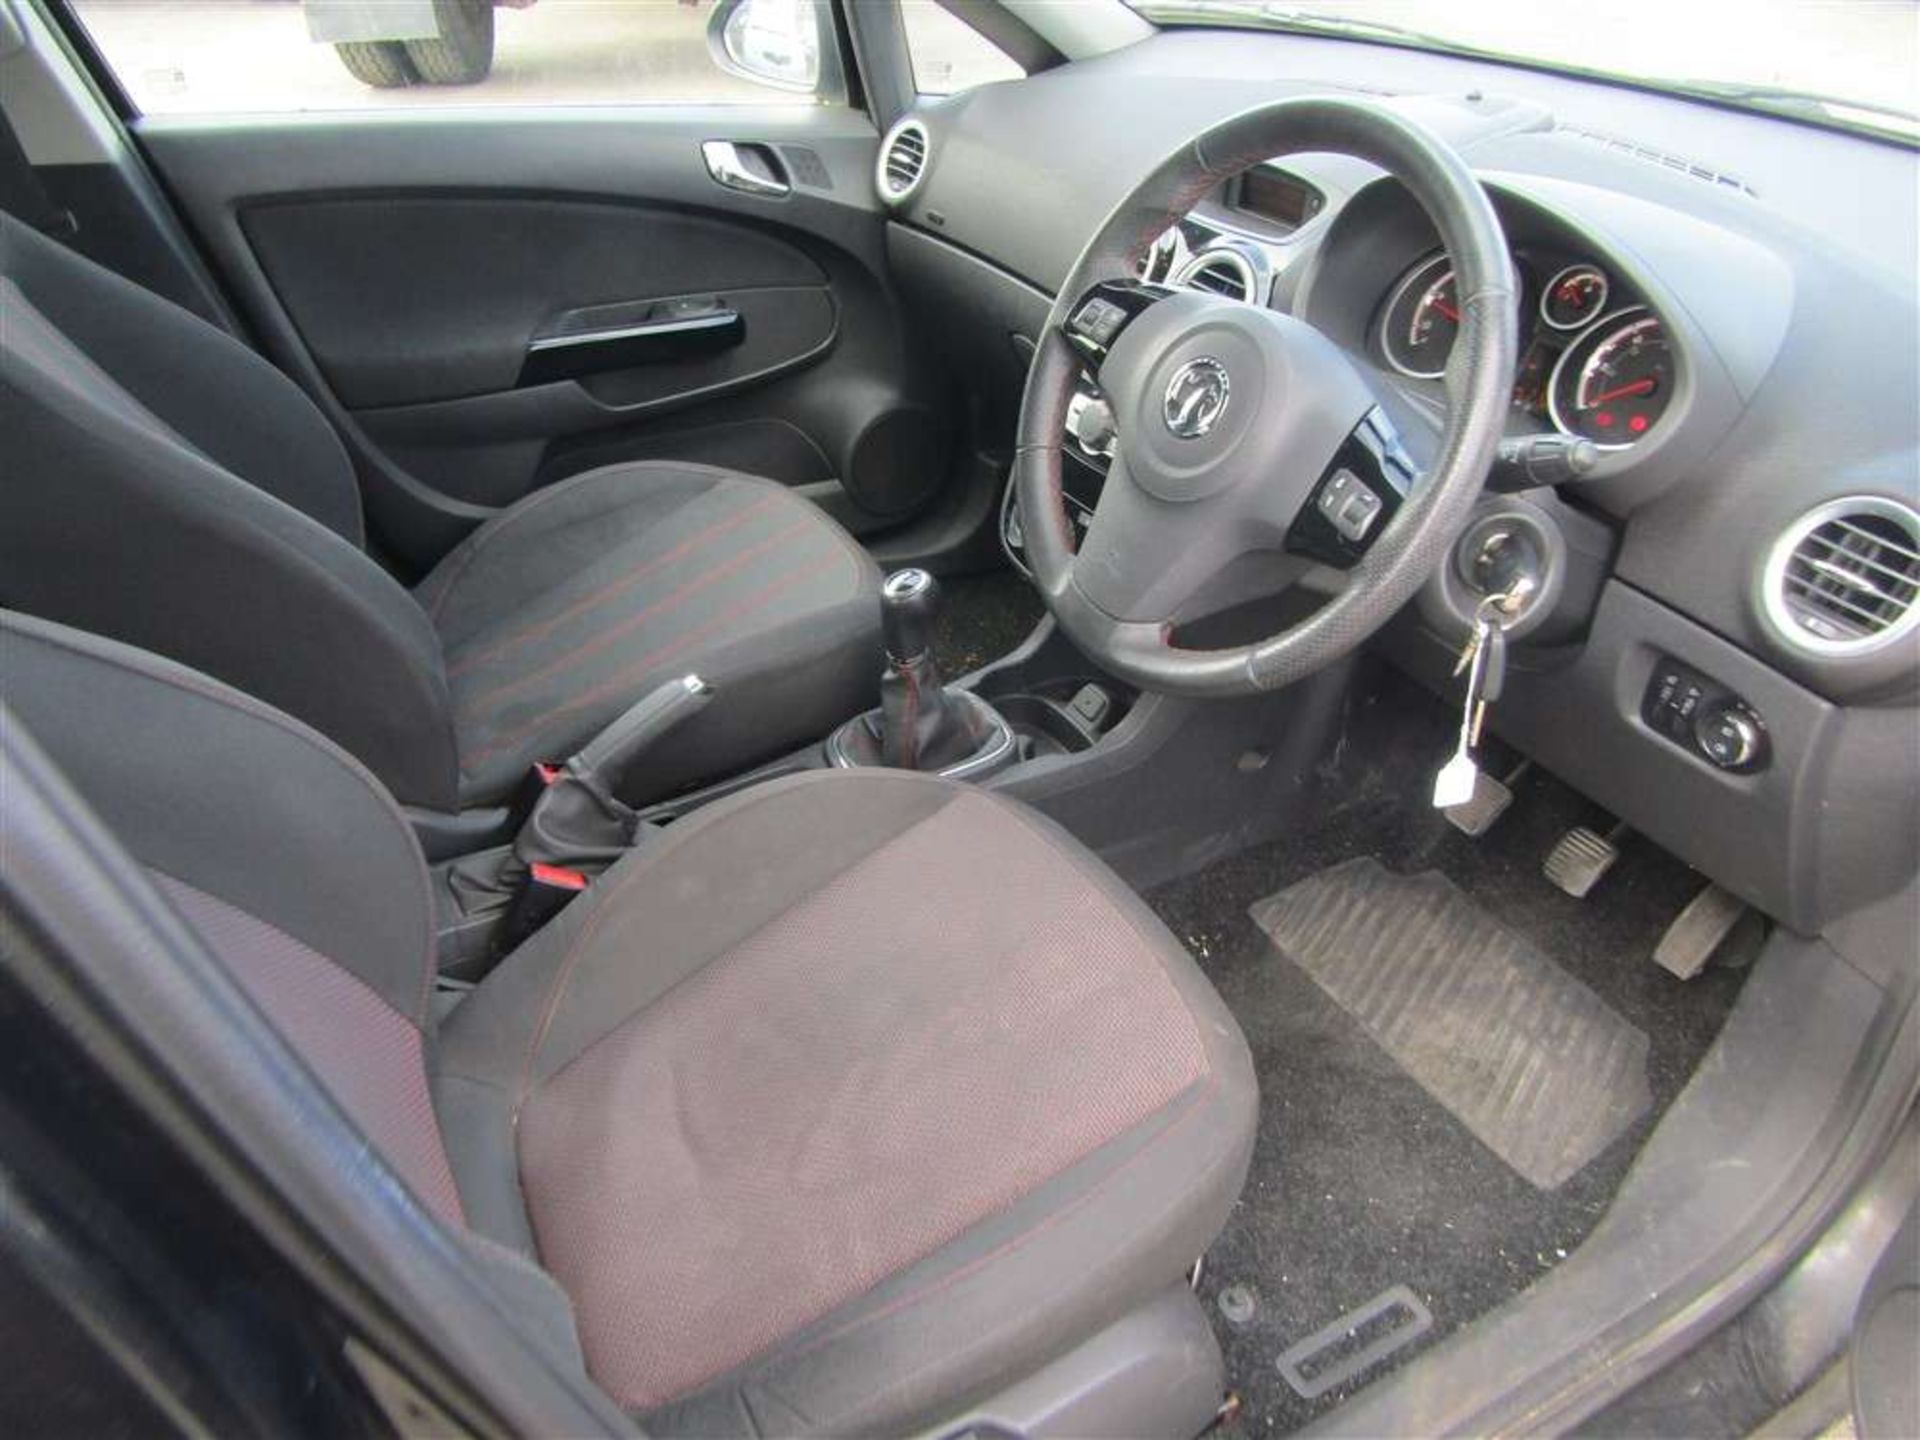 2012 12 reg Vauxhall Corsa SXI AC 1.2 Ecoflex S/S - Image 4 of 6